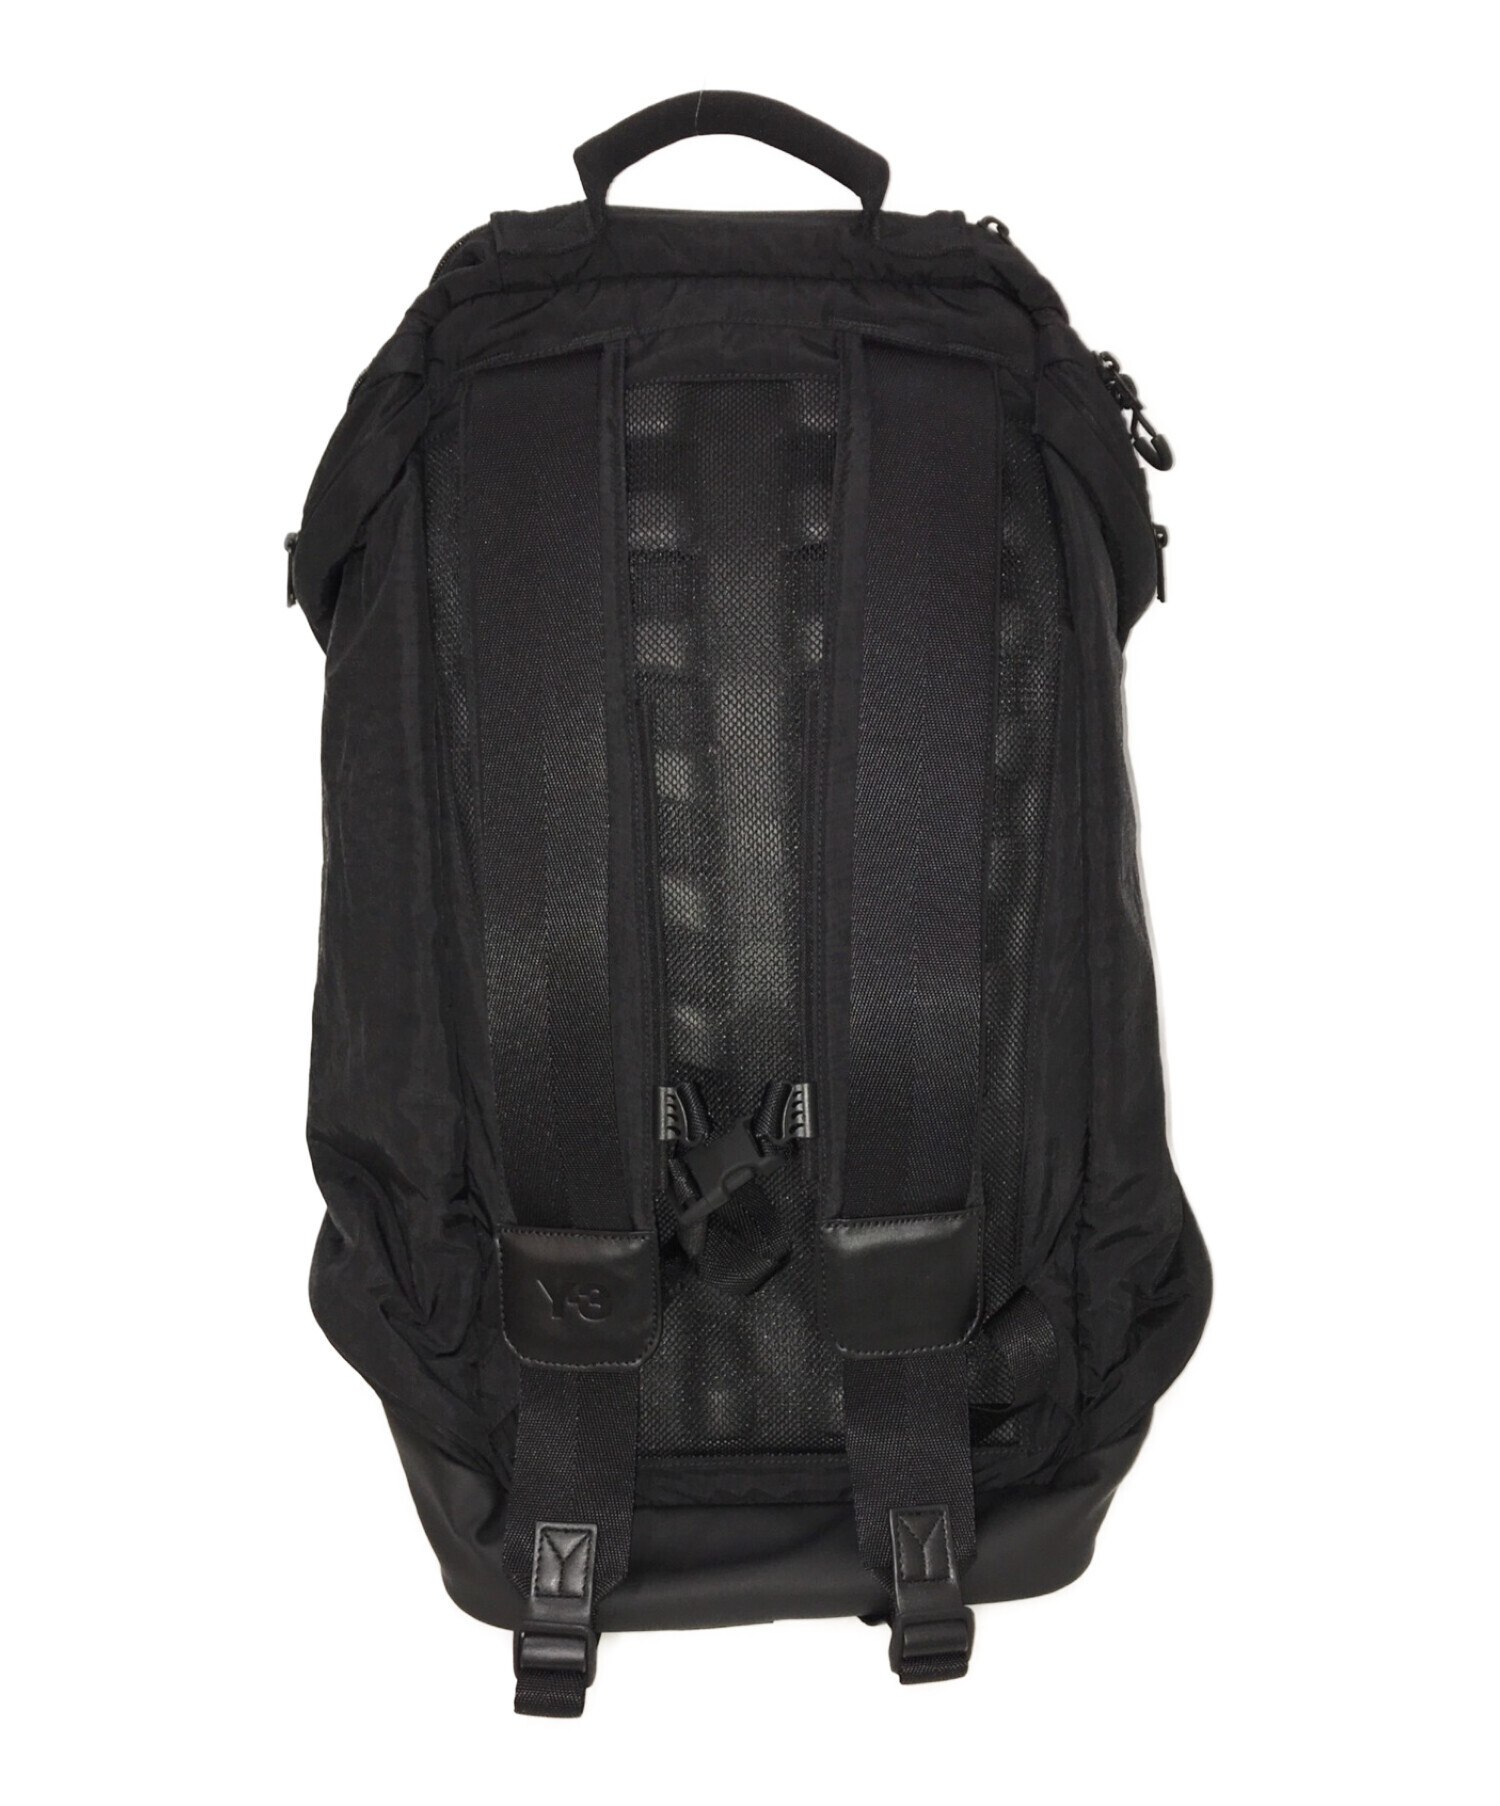 Y-3 (ワイスリー) Travel backpack ブラック